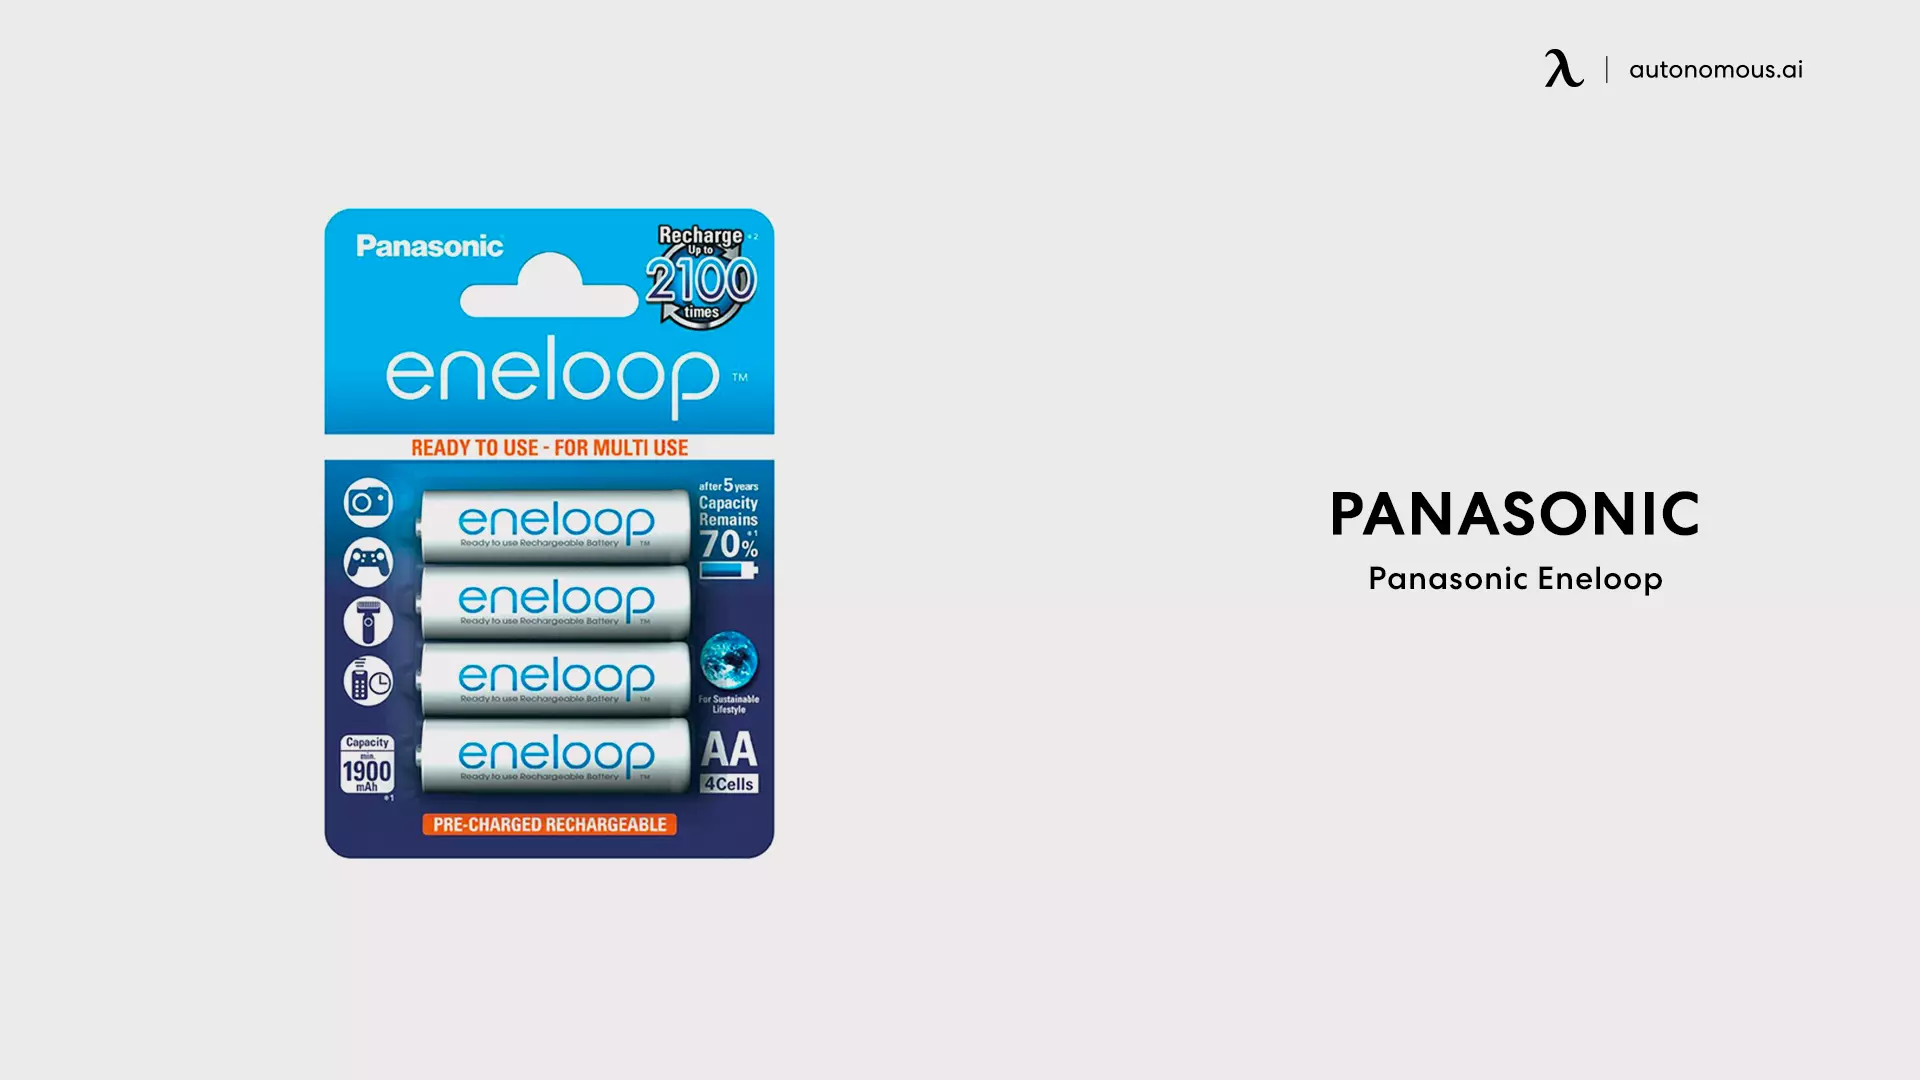 Panasonic Eneloop - tech gifts under $50